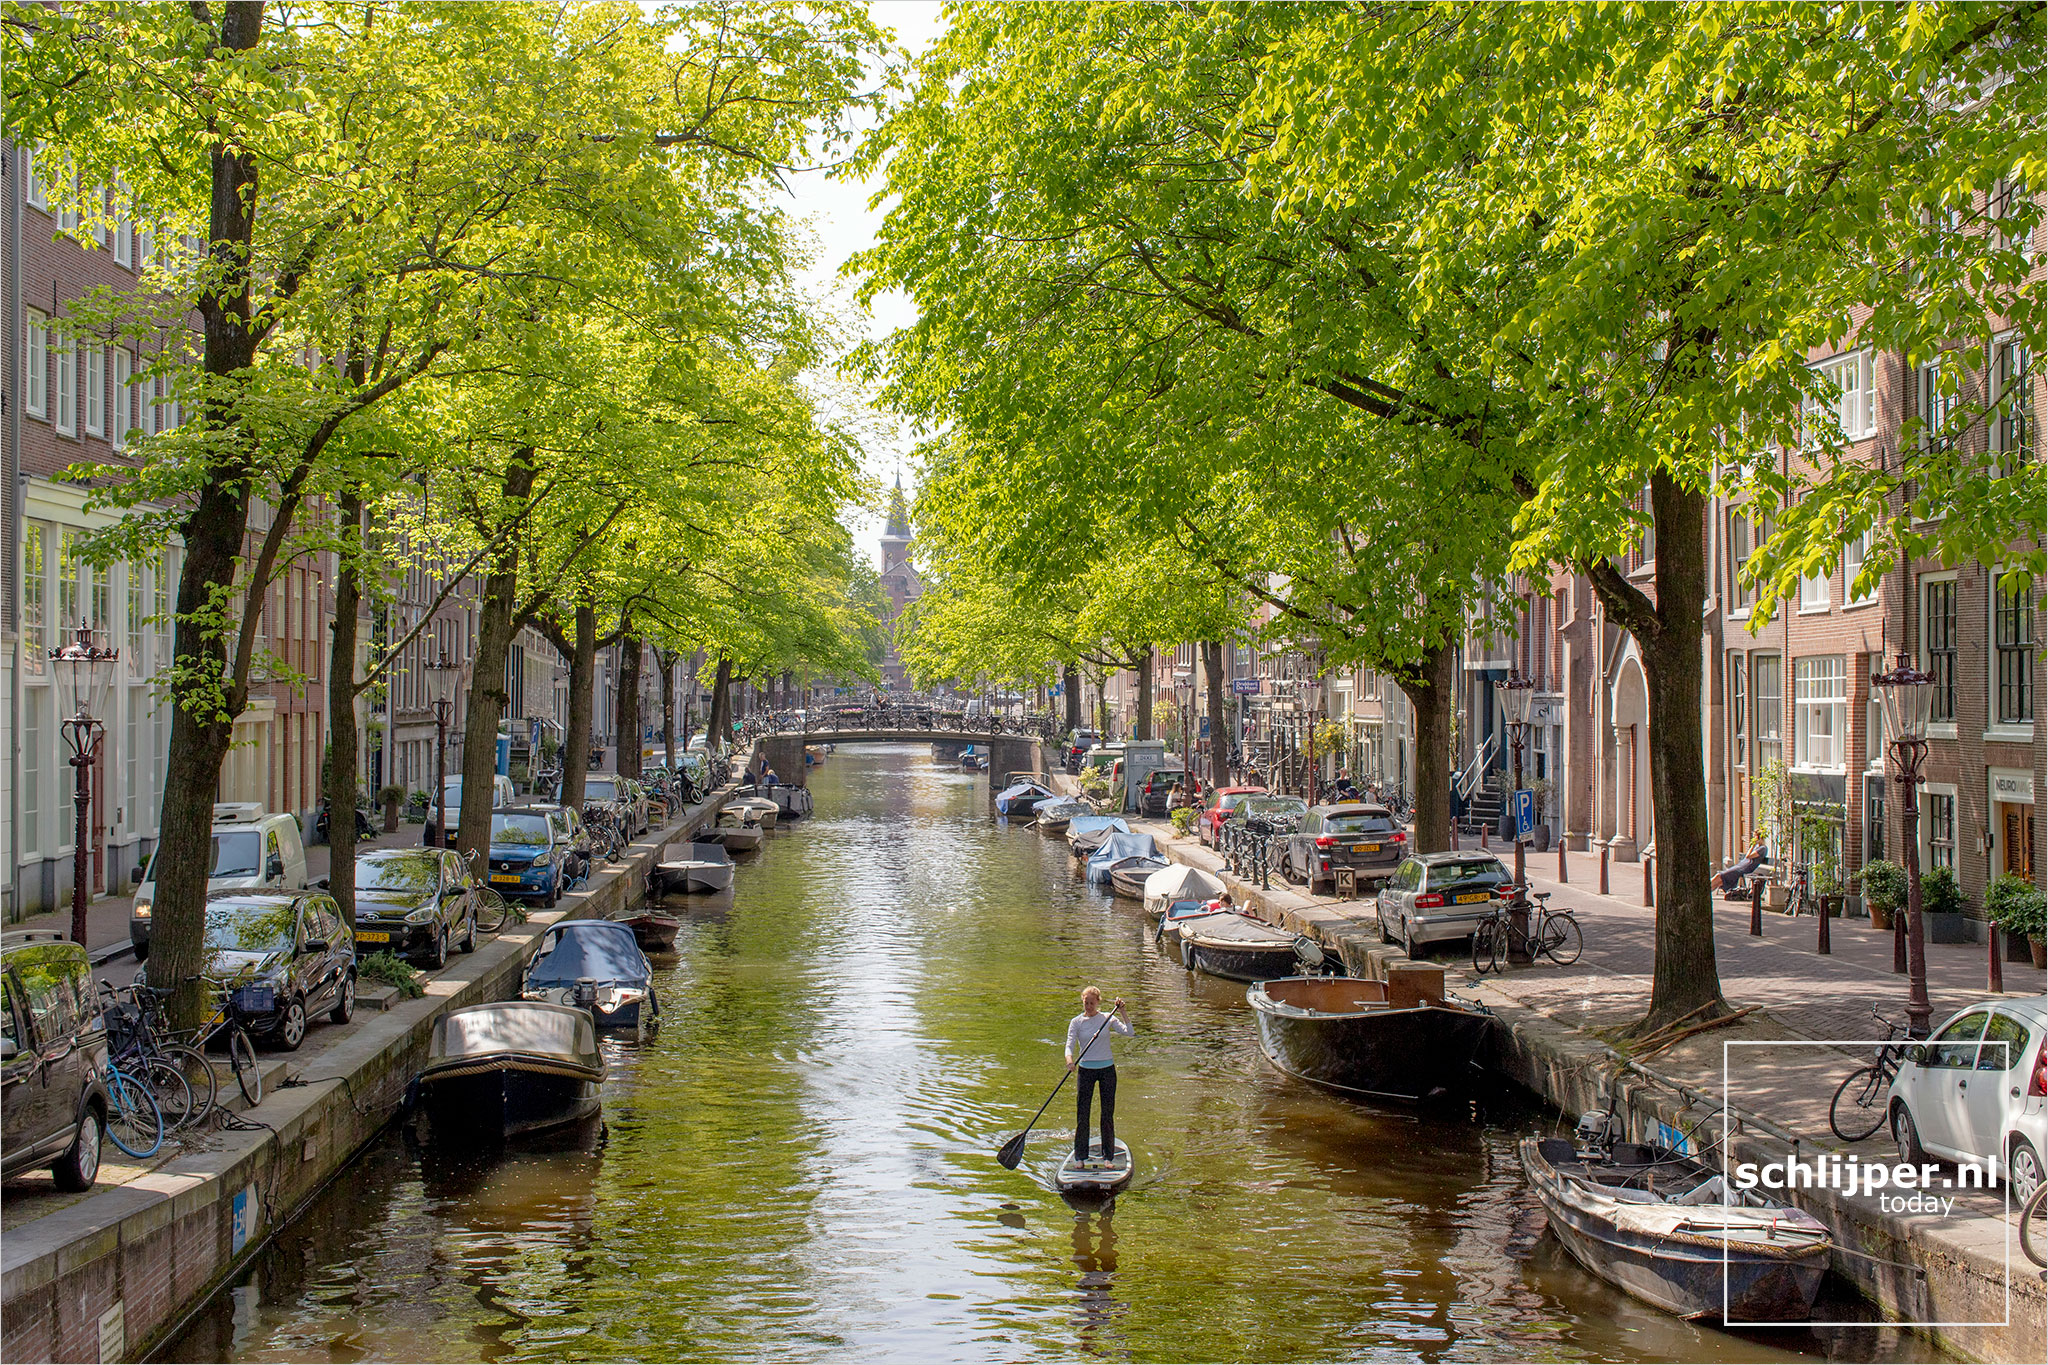 Nederland, Amsterdam, 7 mei 2020